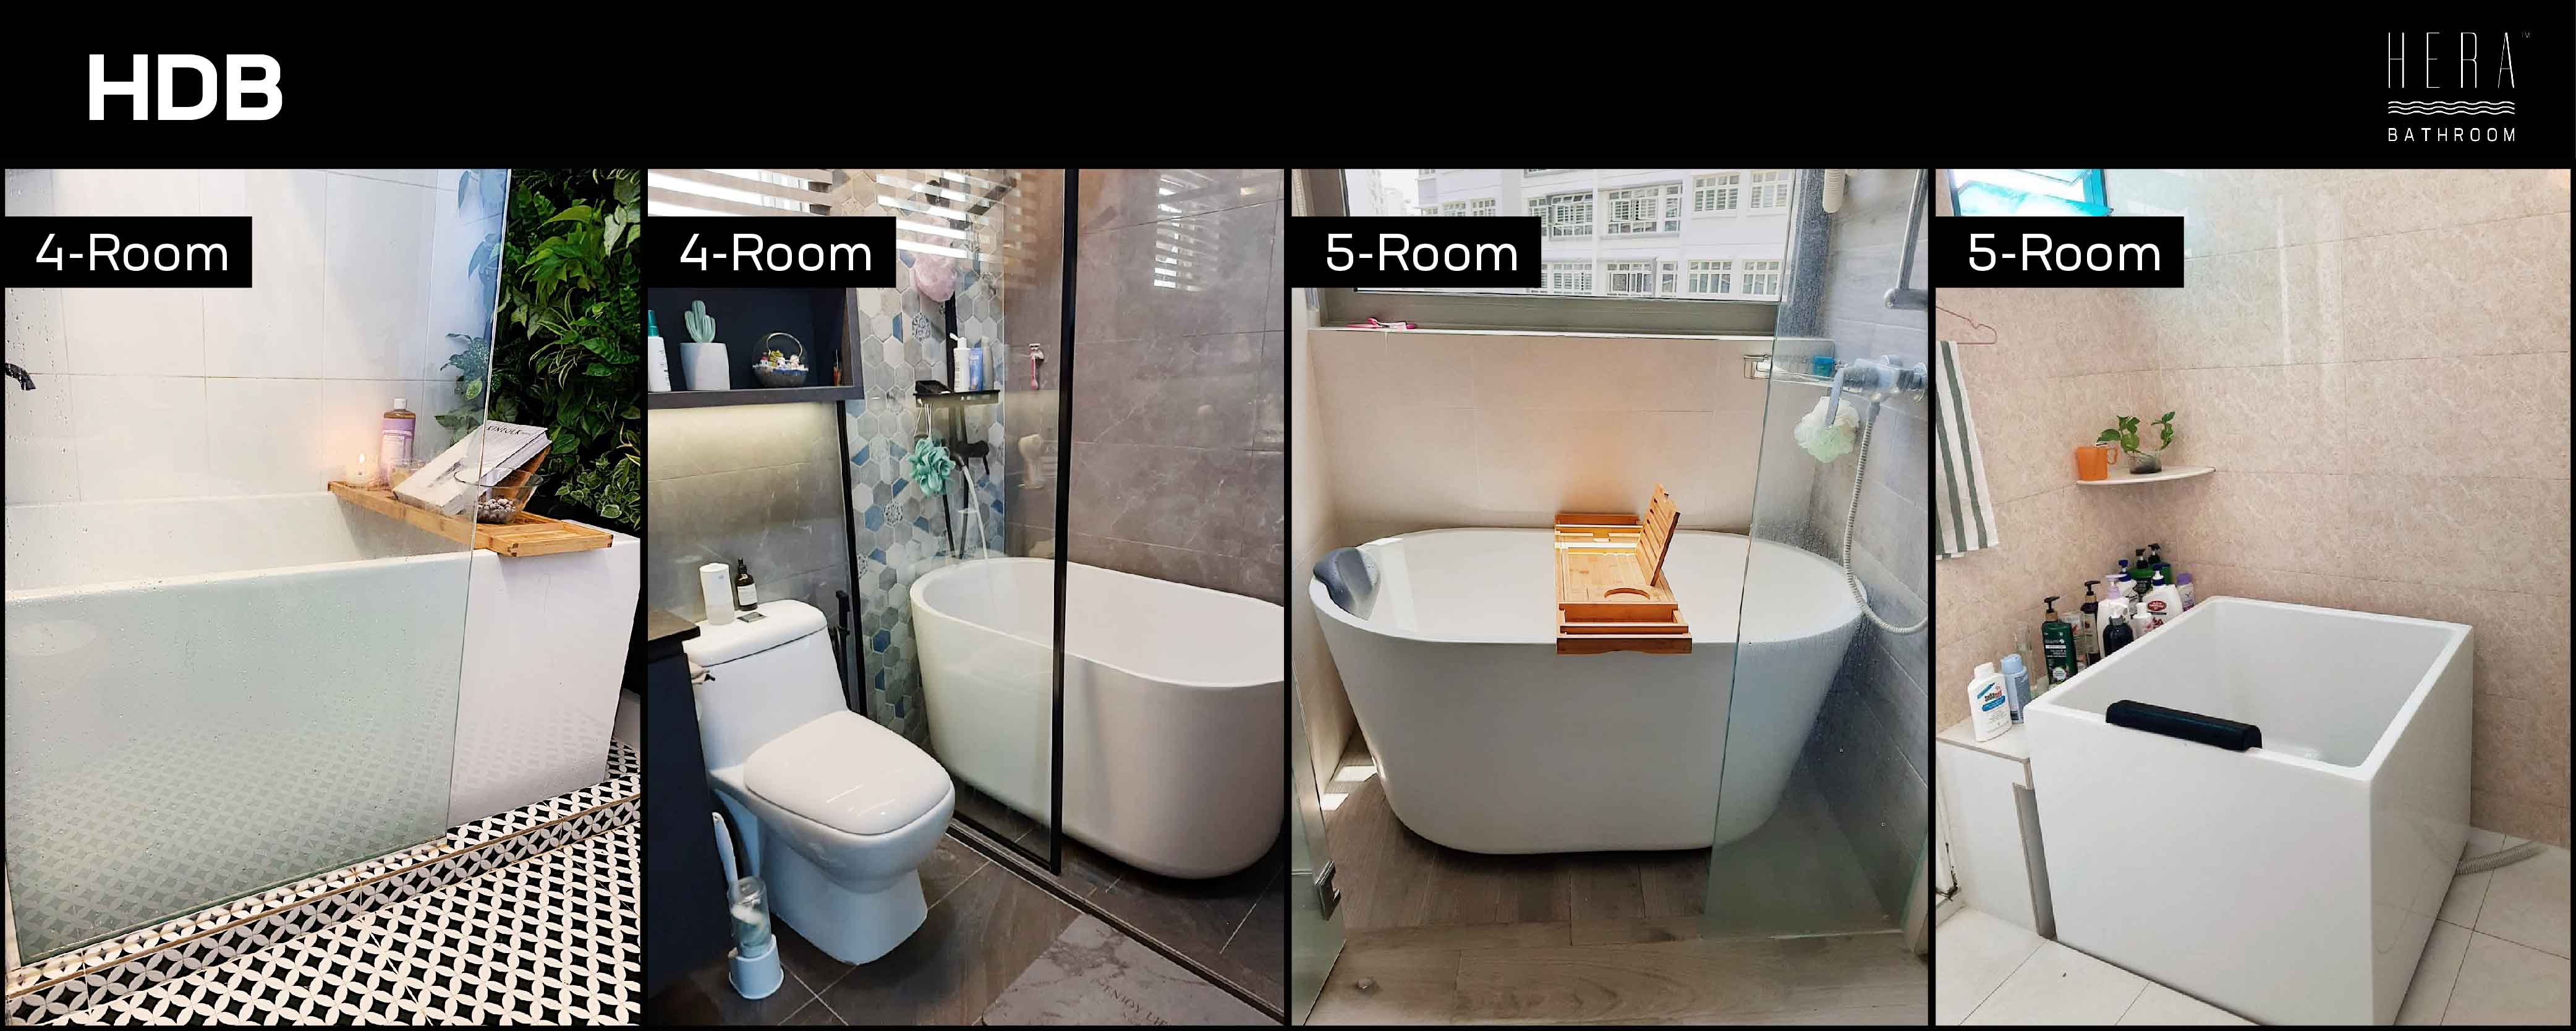 4-5 Room bathtubs